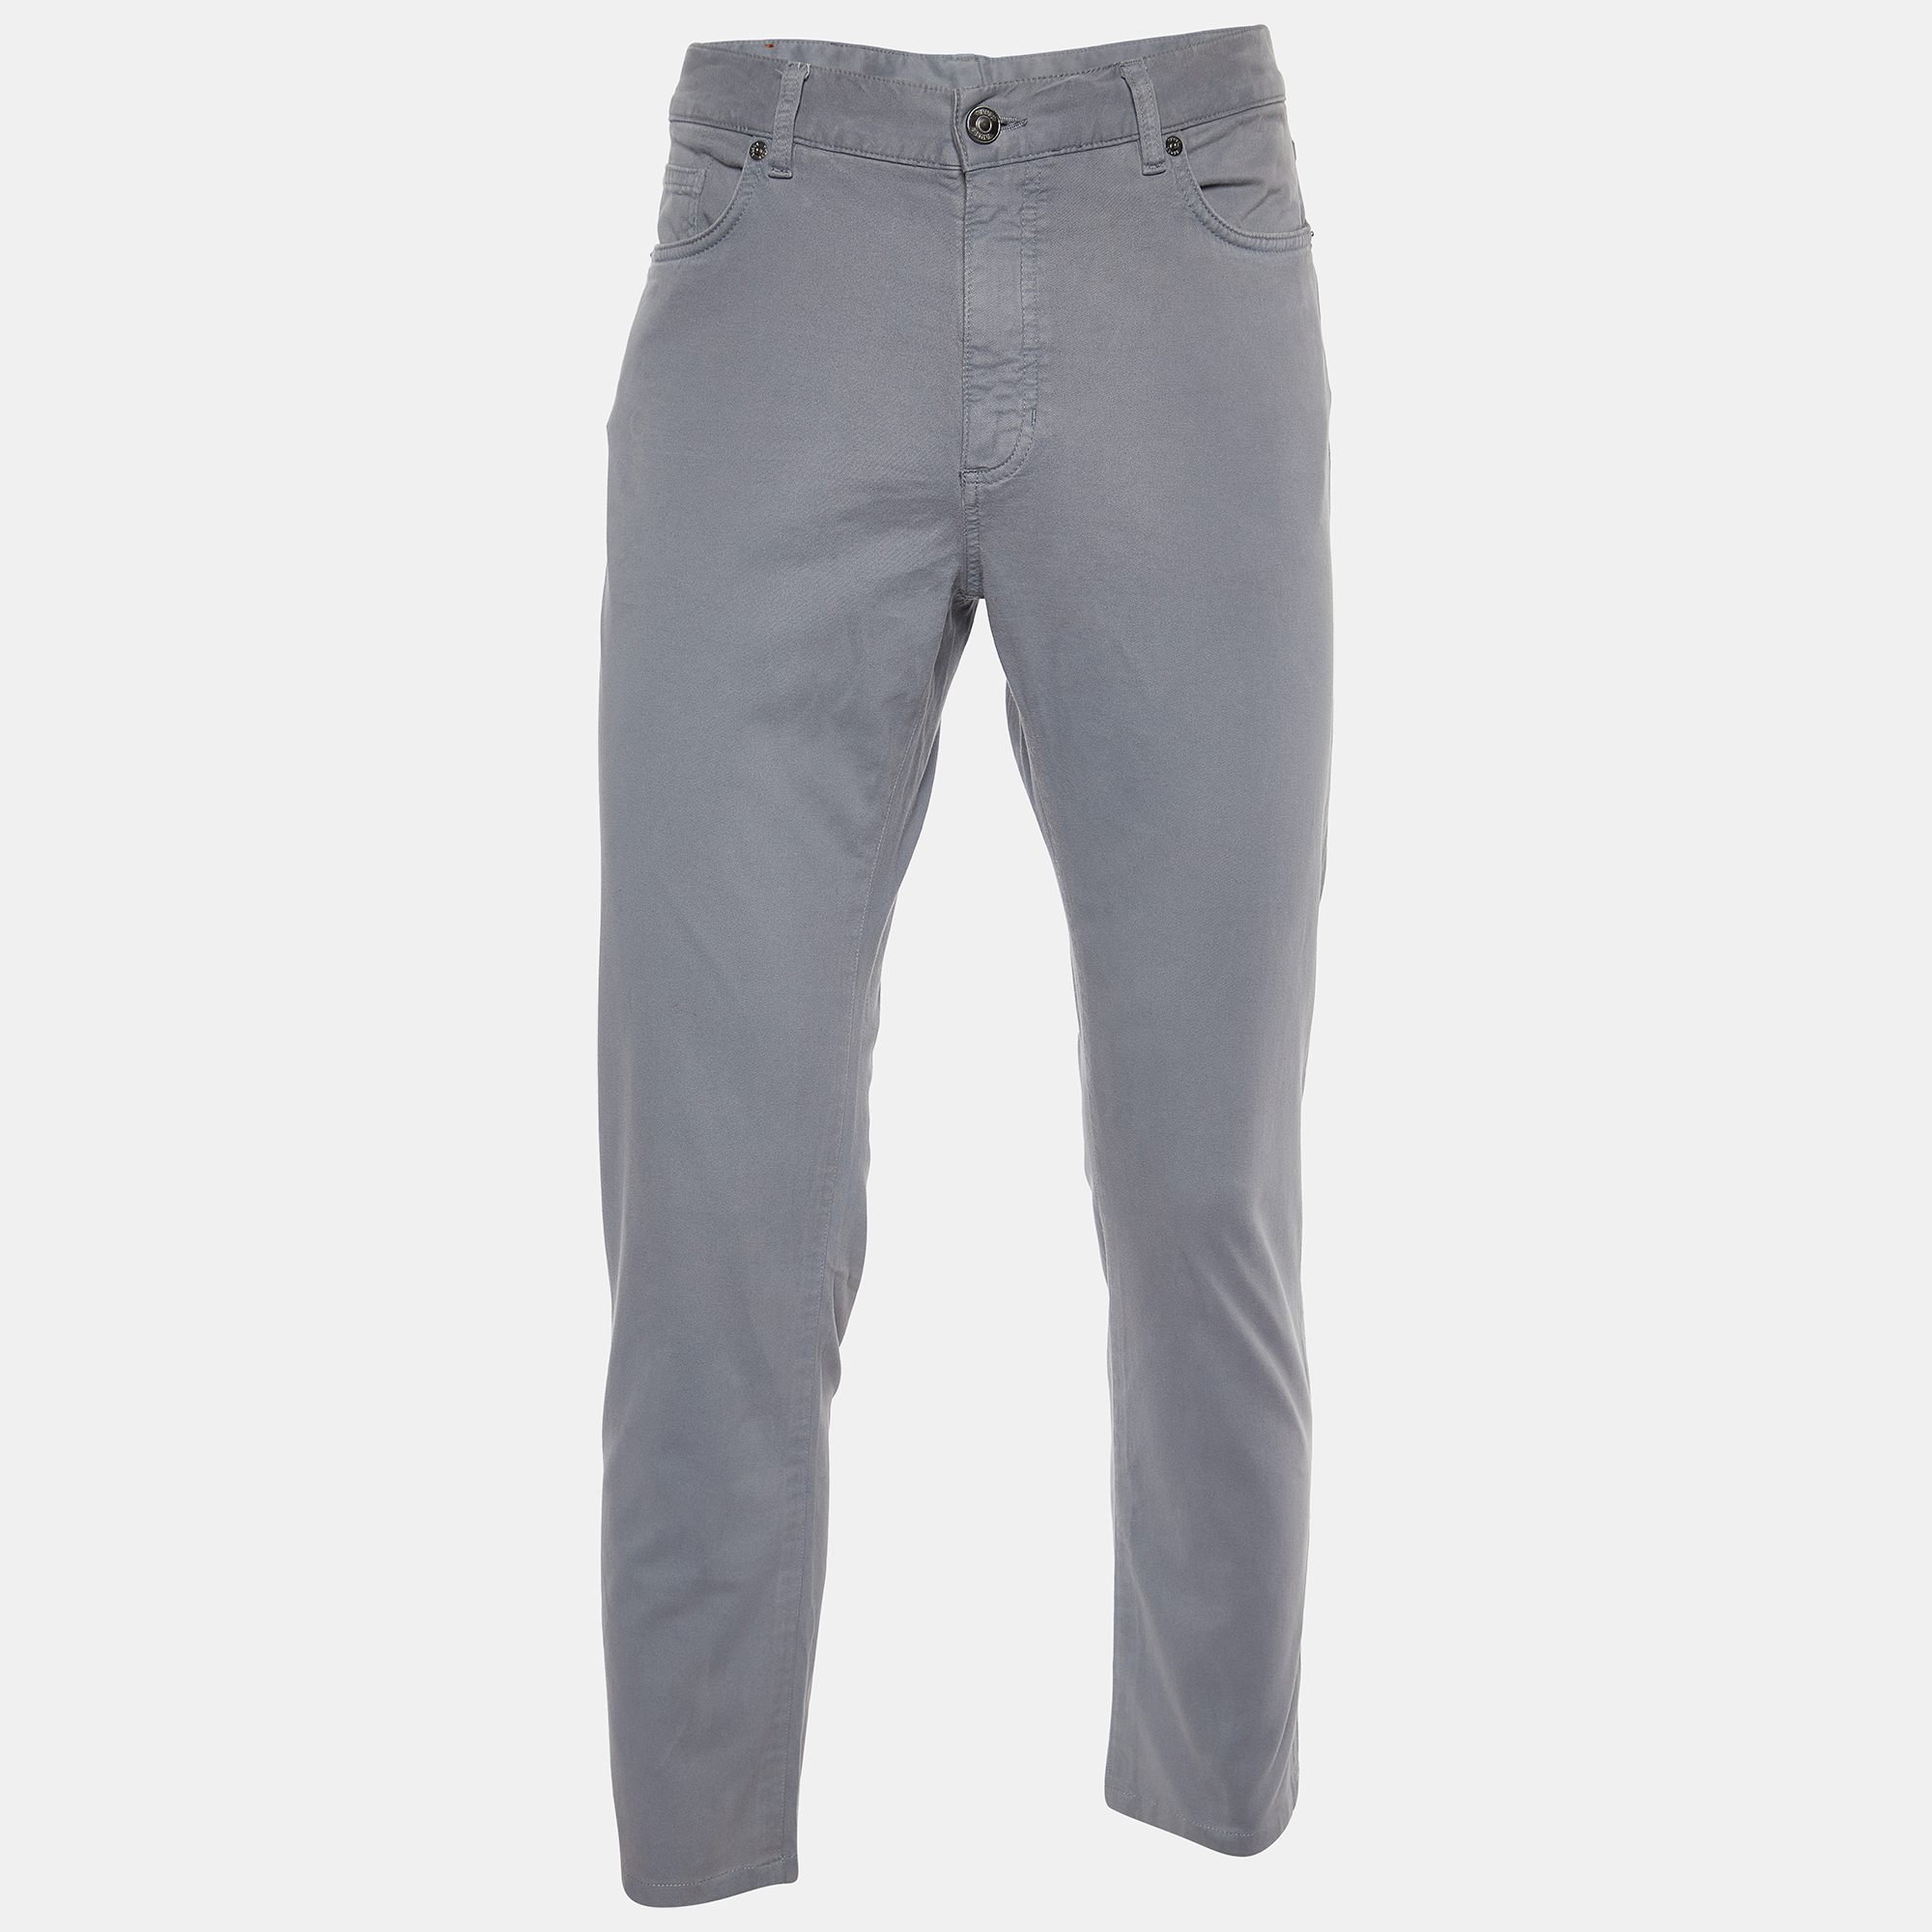 Ermenegildo zegna zegna grey cotton regular fit city trousers m/waist 34"